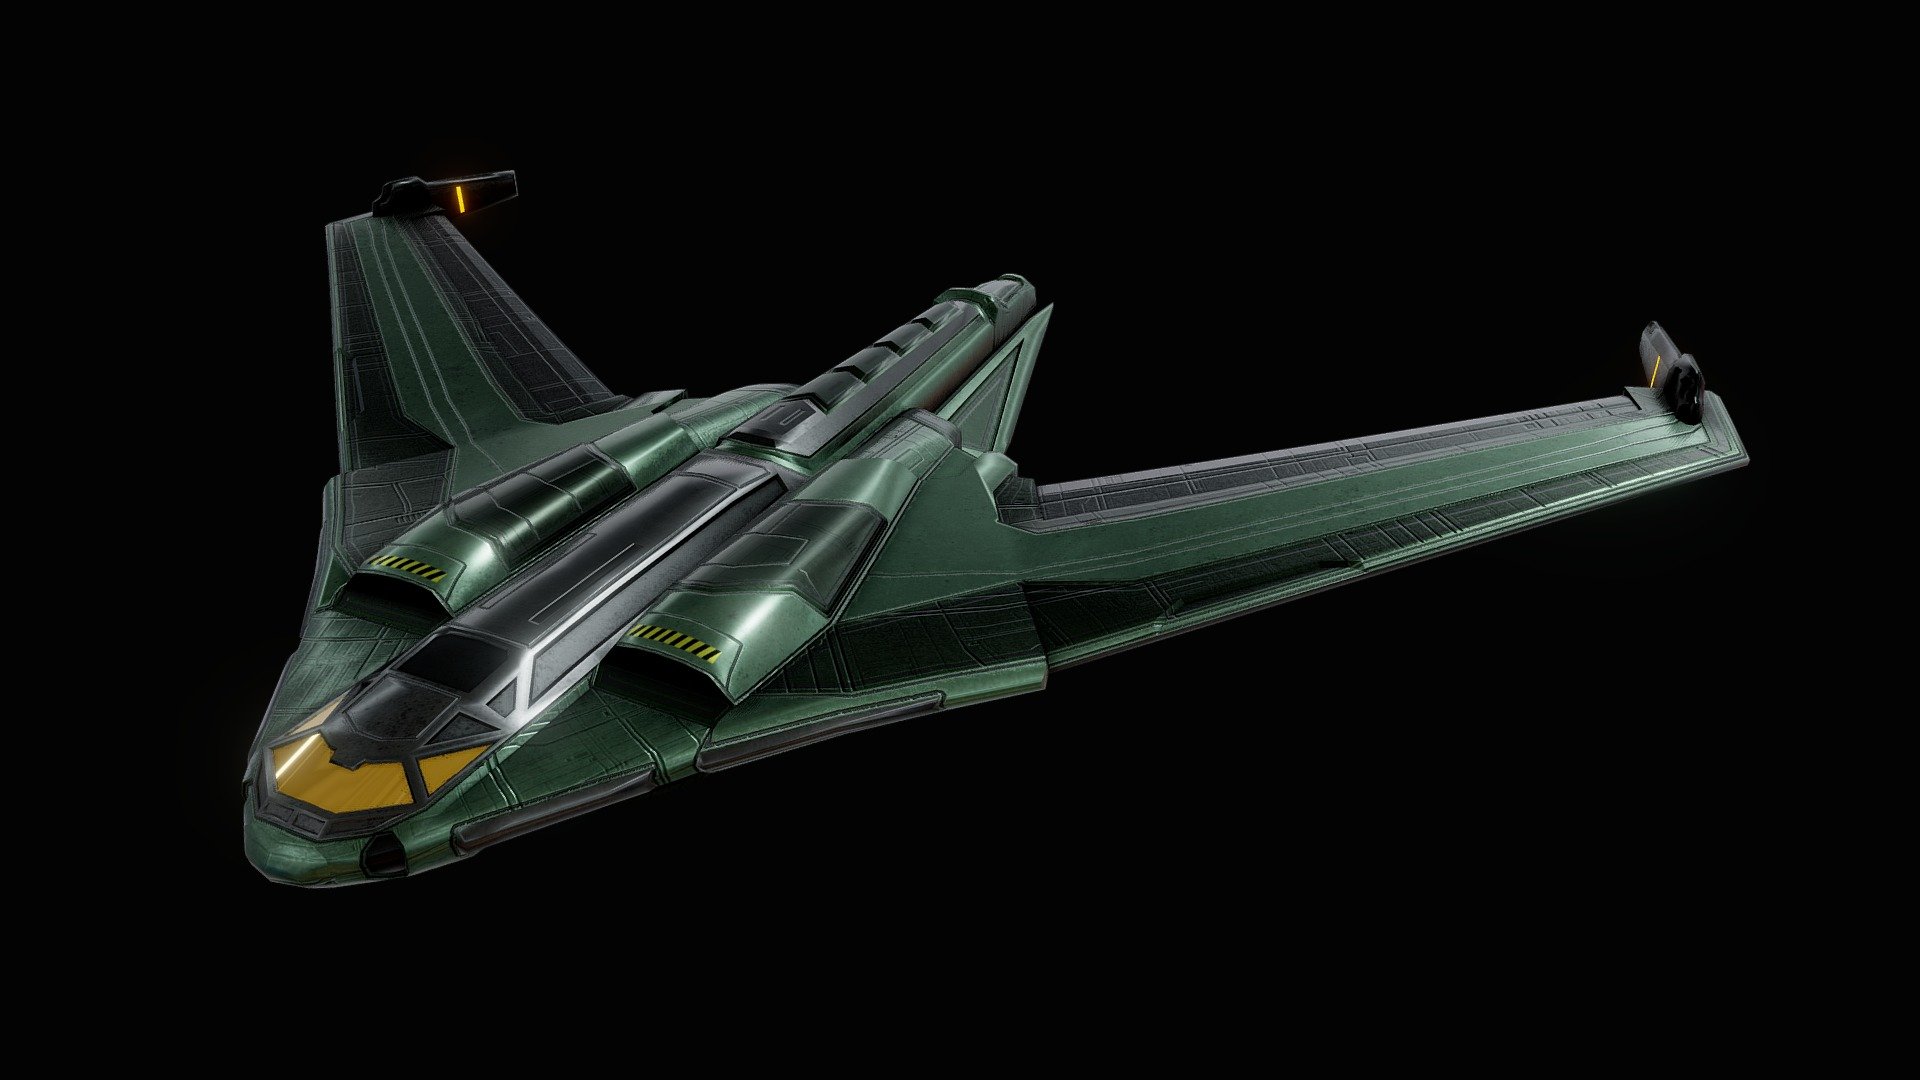 B-65 Suborbital Long-Range Bomber (Shortsword) from Halo Games universe - HALO: UNSC SHORTSWORD - Buy Royalty Free 3D model by jonathanborges3d 3d model